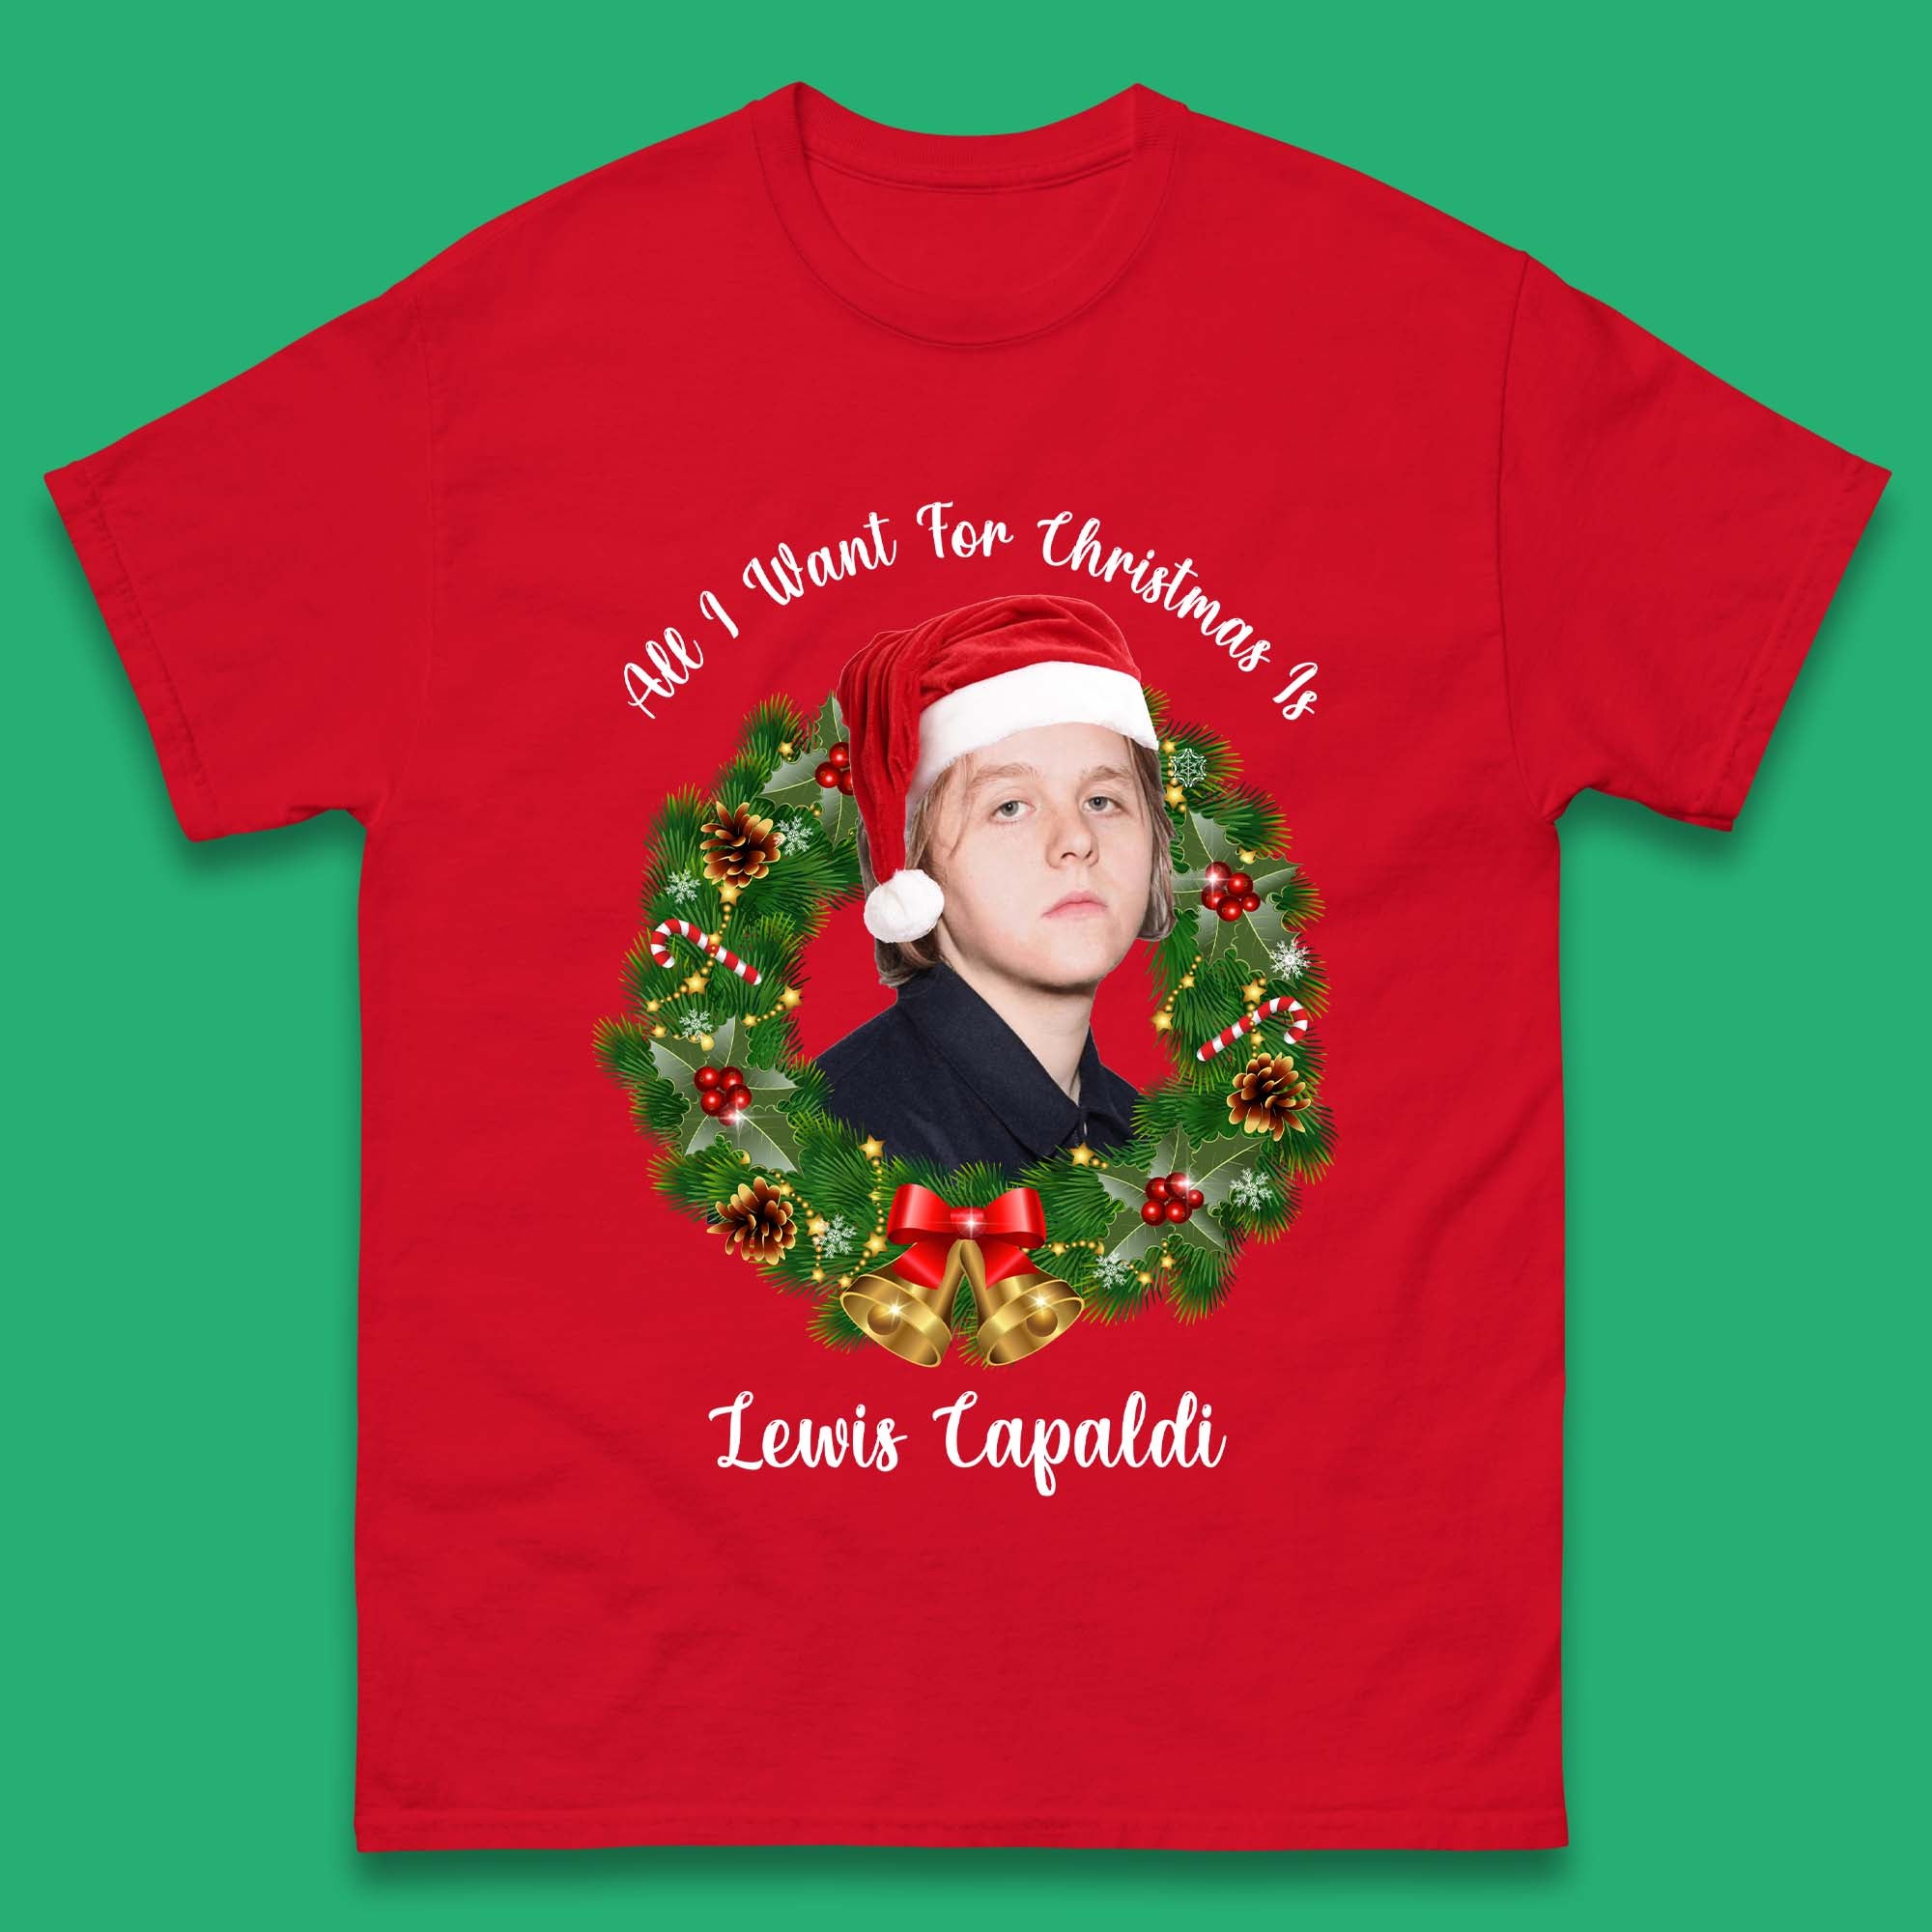 Lewis Capaldi Christmas Mens T-Shirt